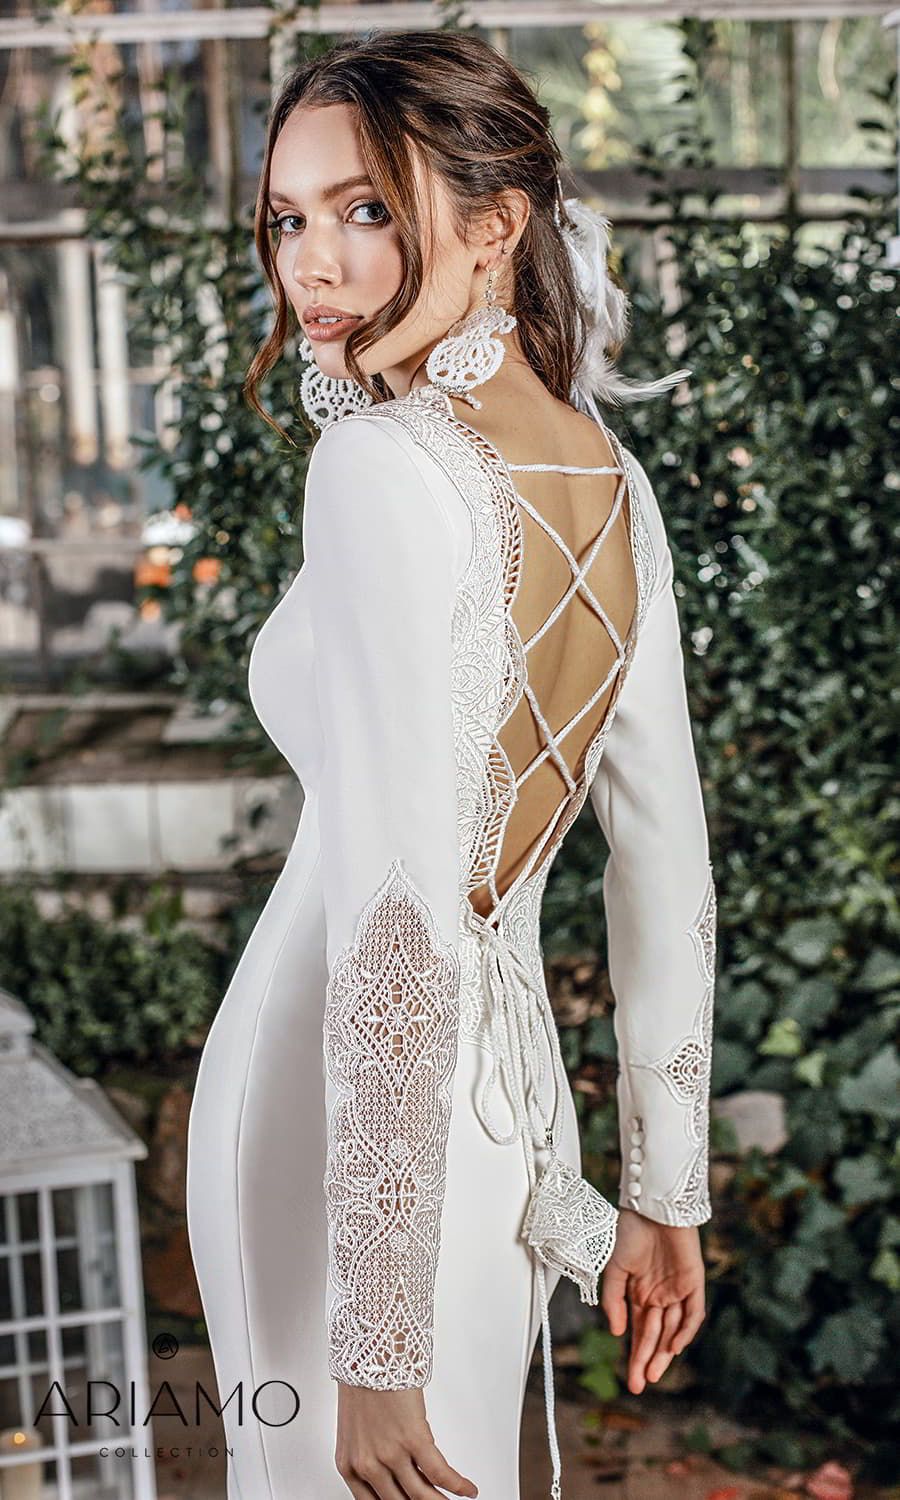 ariamo 2022 bridal long sleeve jewel neckline clean minimally embellished sheath wedding dress open back chapel train (sylvia) zbv